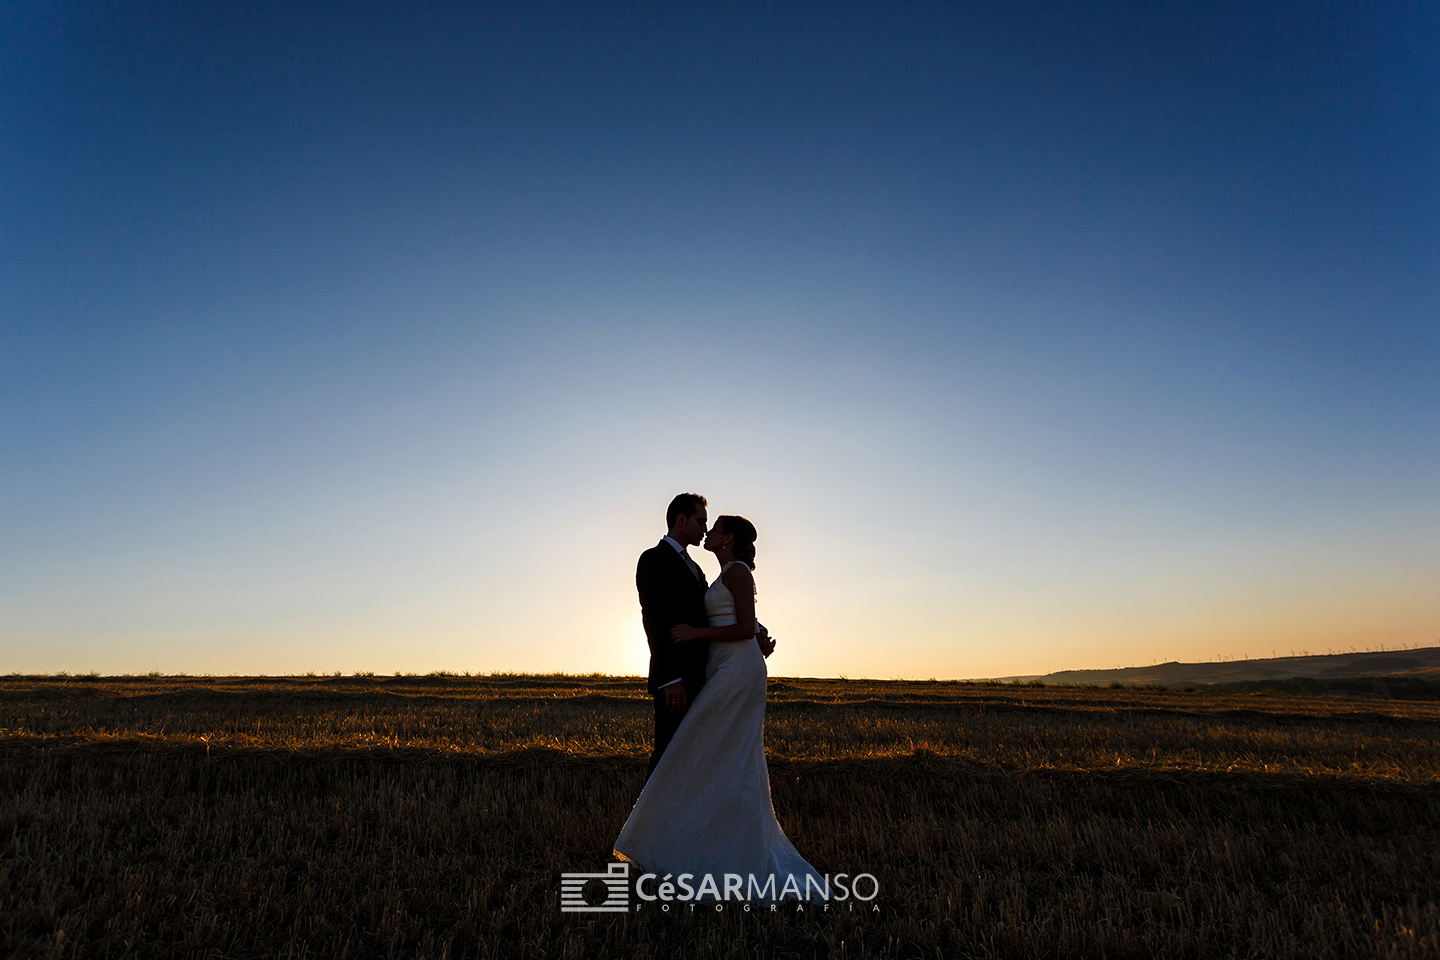 César Manso Fotógrafo: Fotógrafos de boda en Burgos - Boda%20AlejandrayJairo-37.JPG